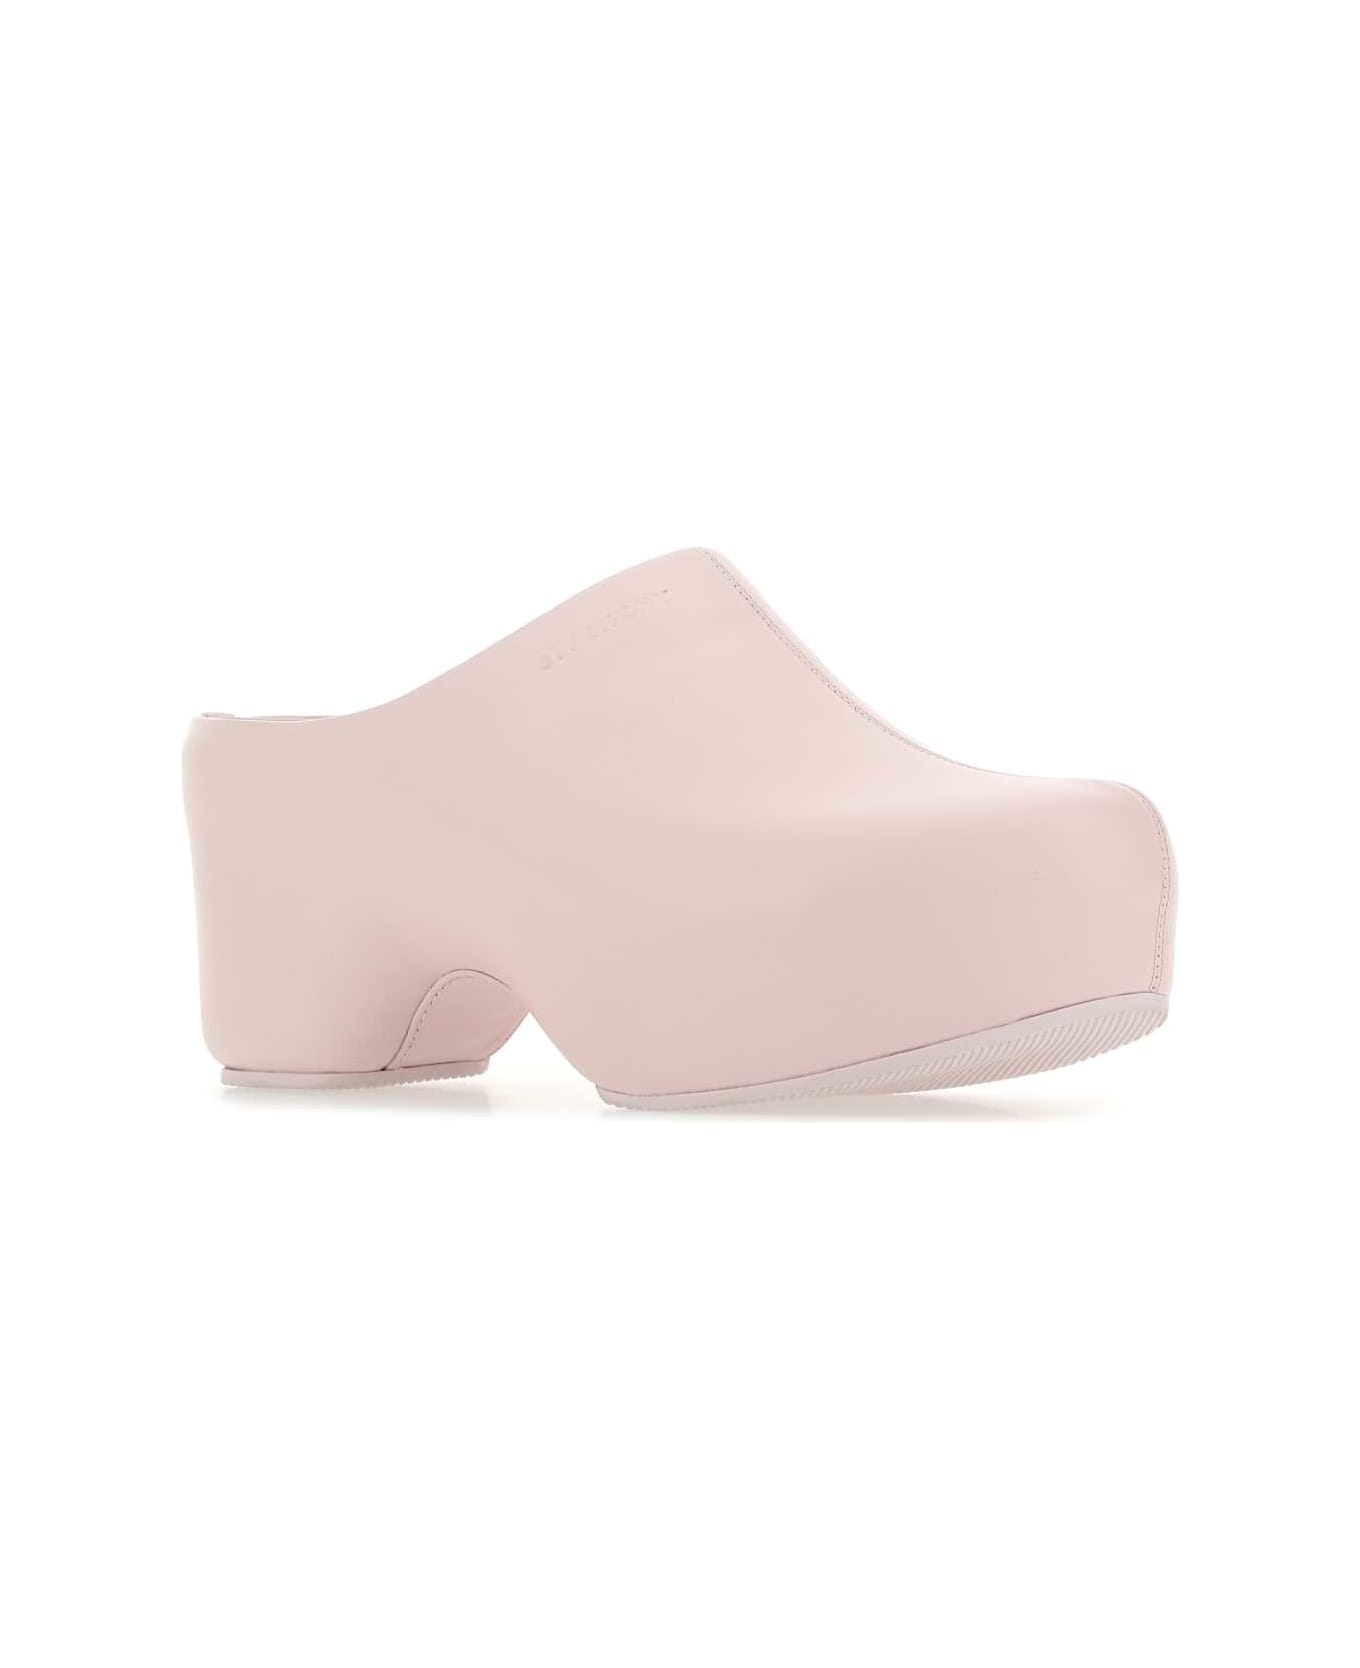 Givenchy Pastel Pink Leather G Clog Mules - 681 サンダル